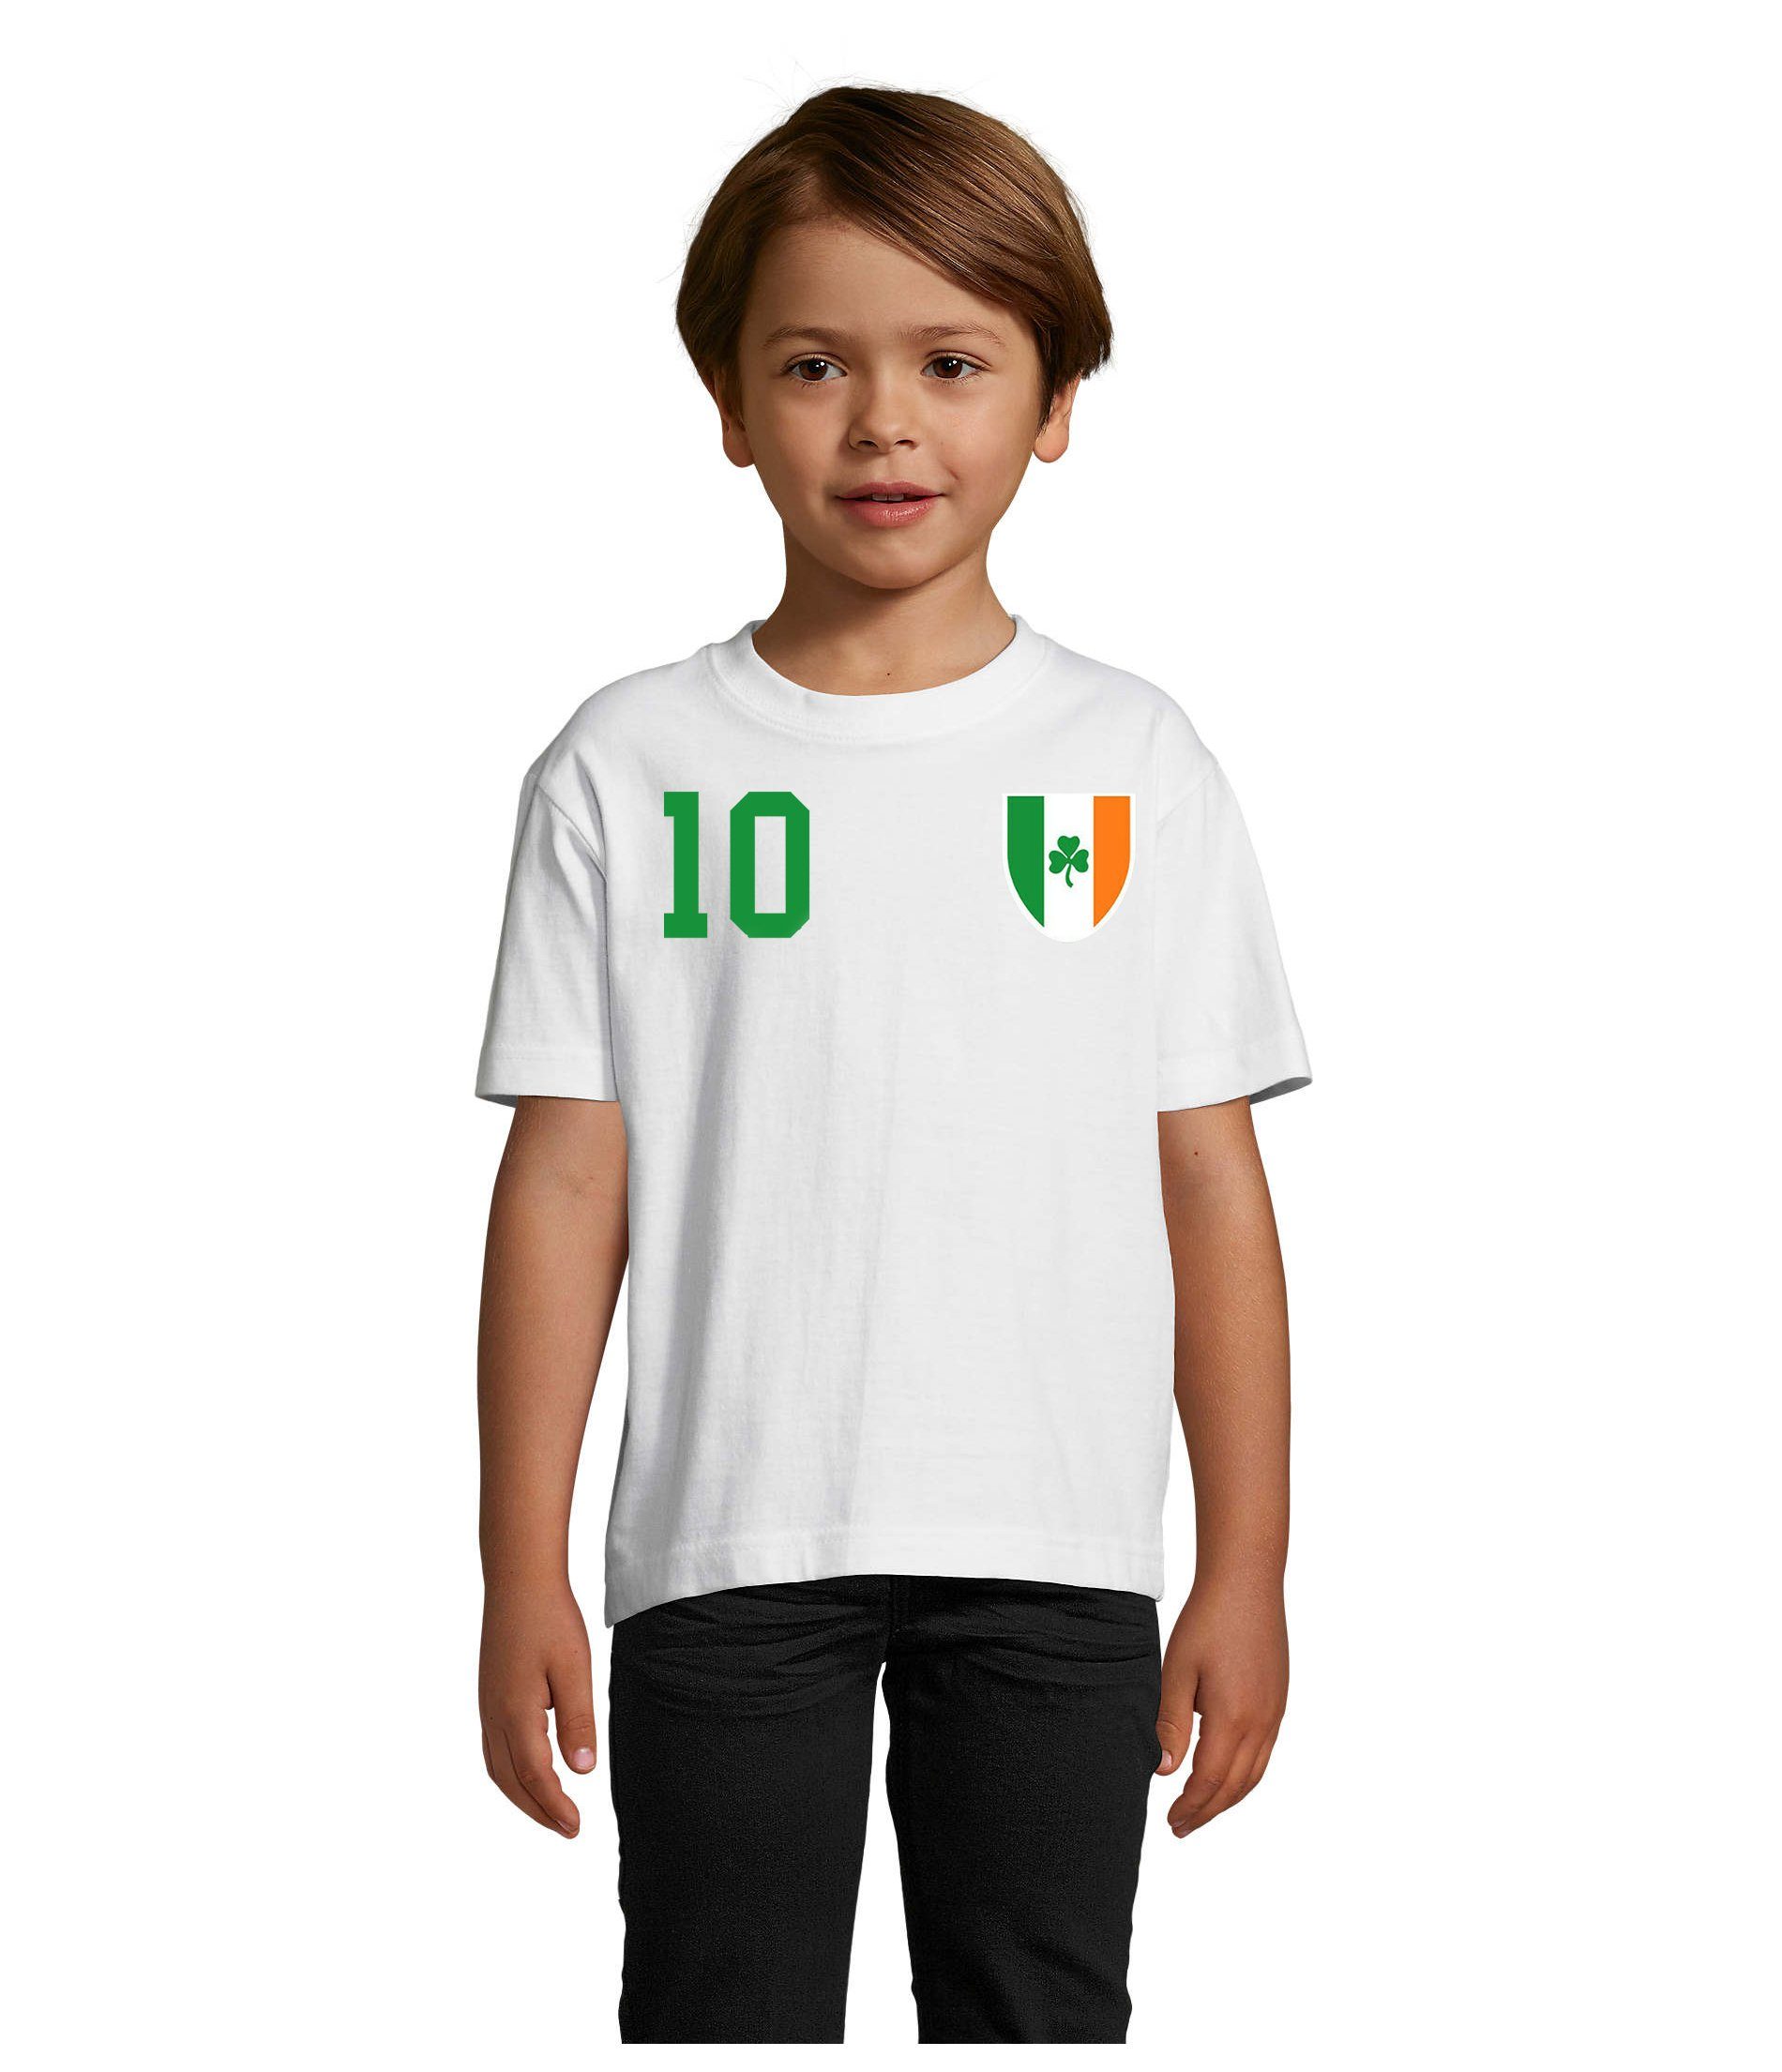 Blondie & Brownie EM Handball Grün/Weiss Fußball T-Shirt Trikot Kinder Sport WM Weltmeister Irland